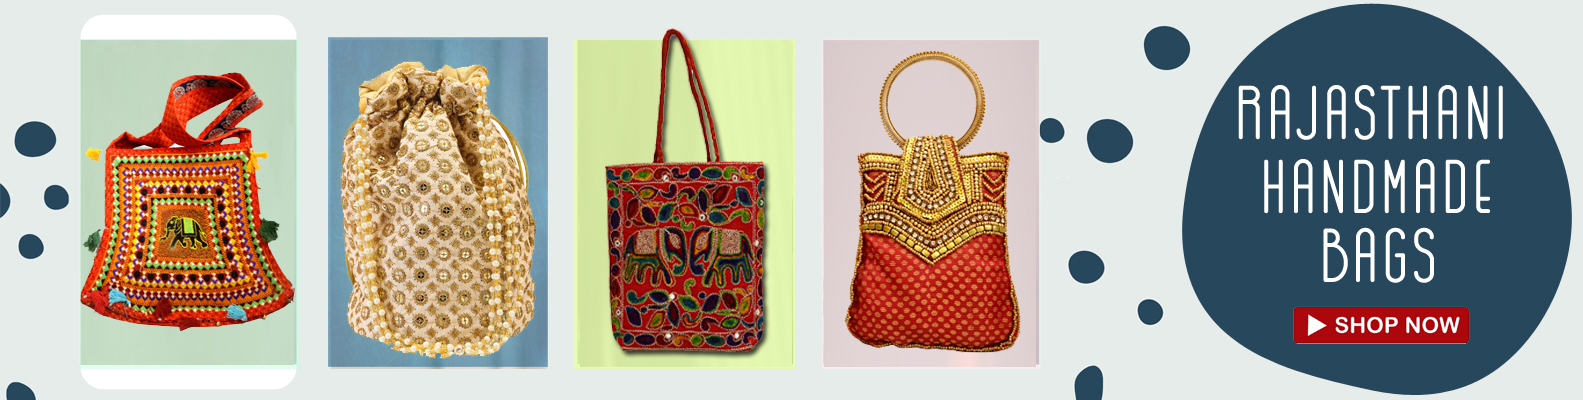 Rajasthani Handmade Bags